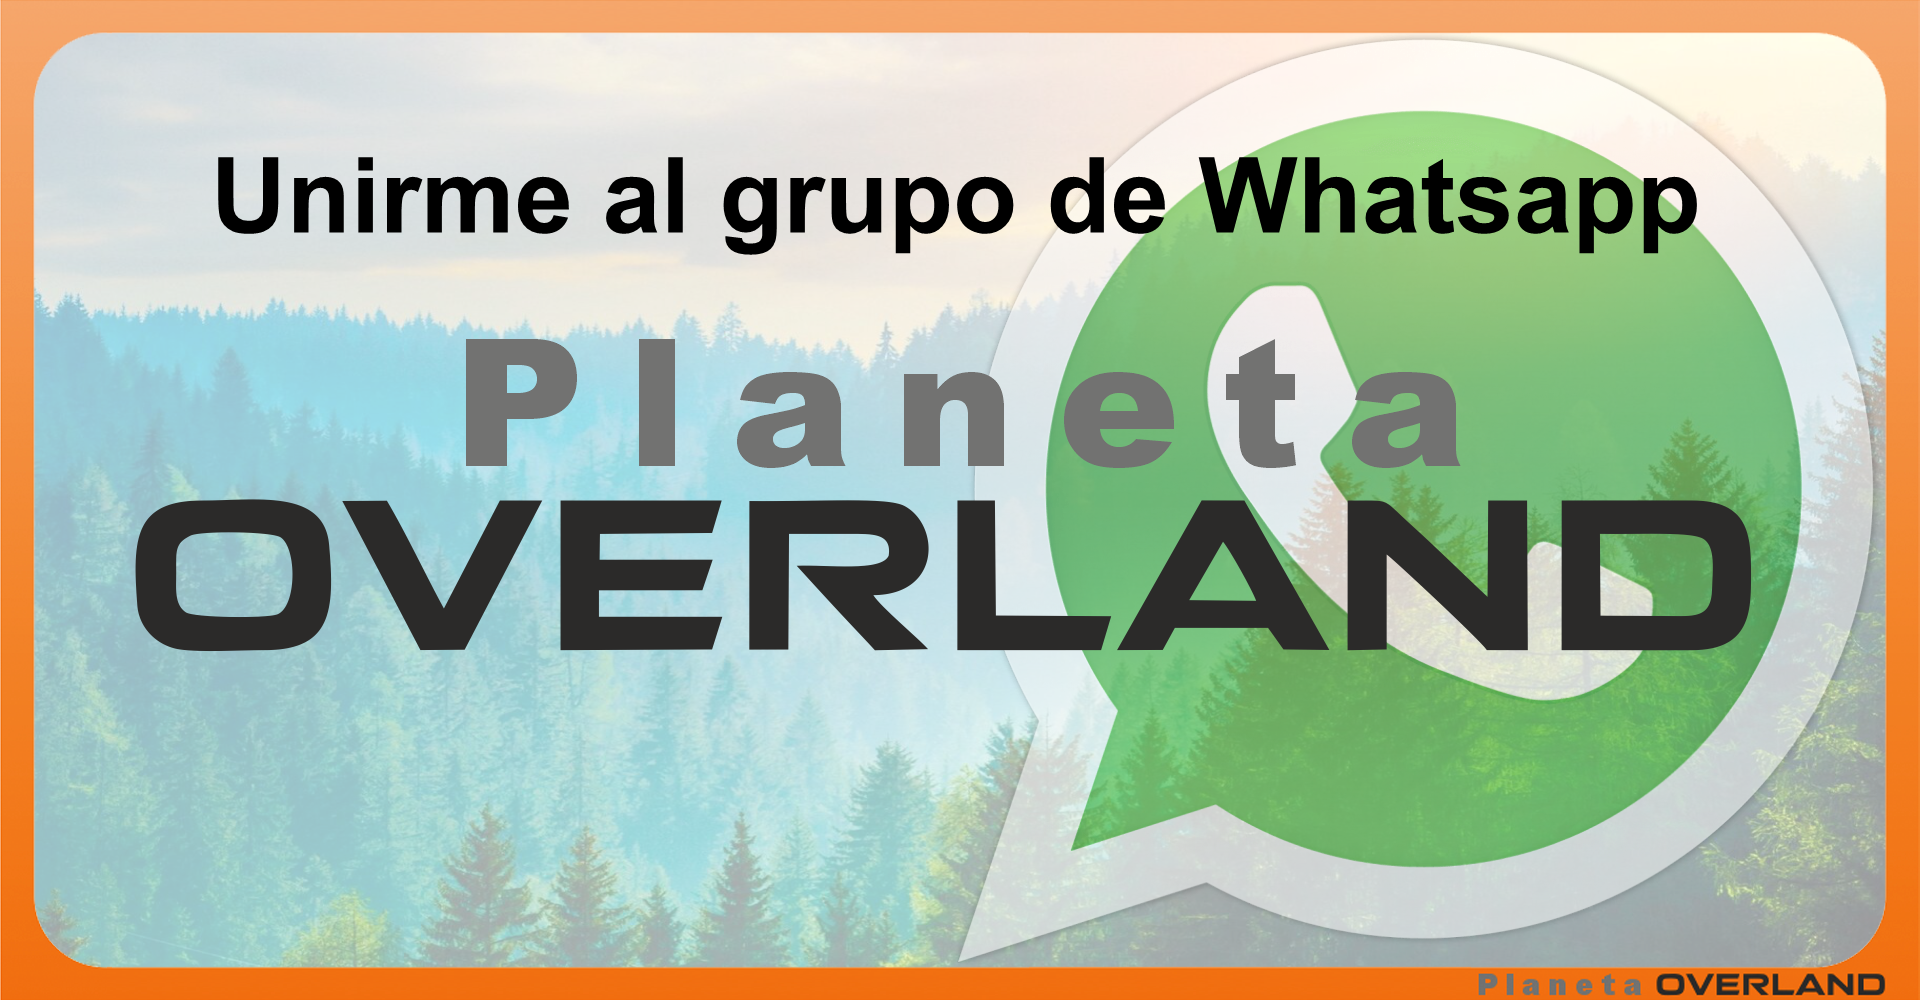 Unirme al grupo de Whatsapp Planeta Overland